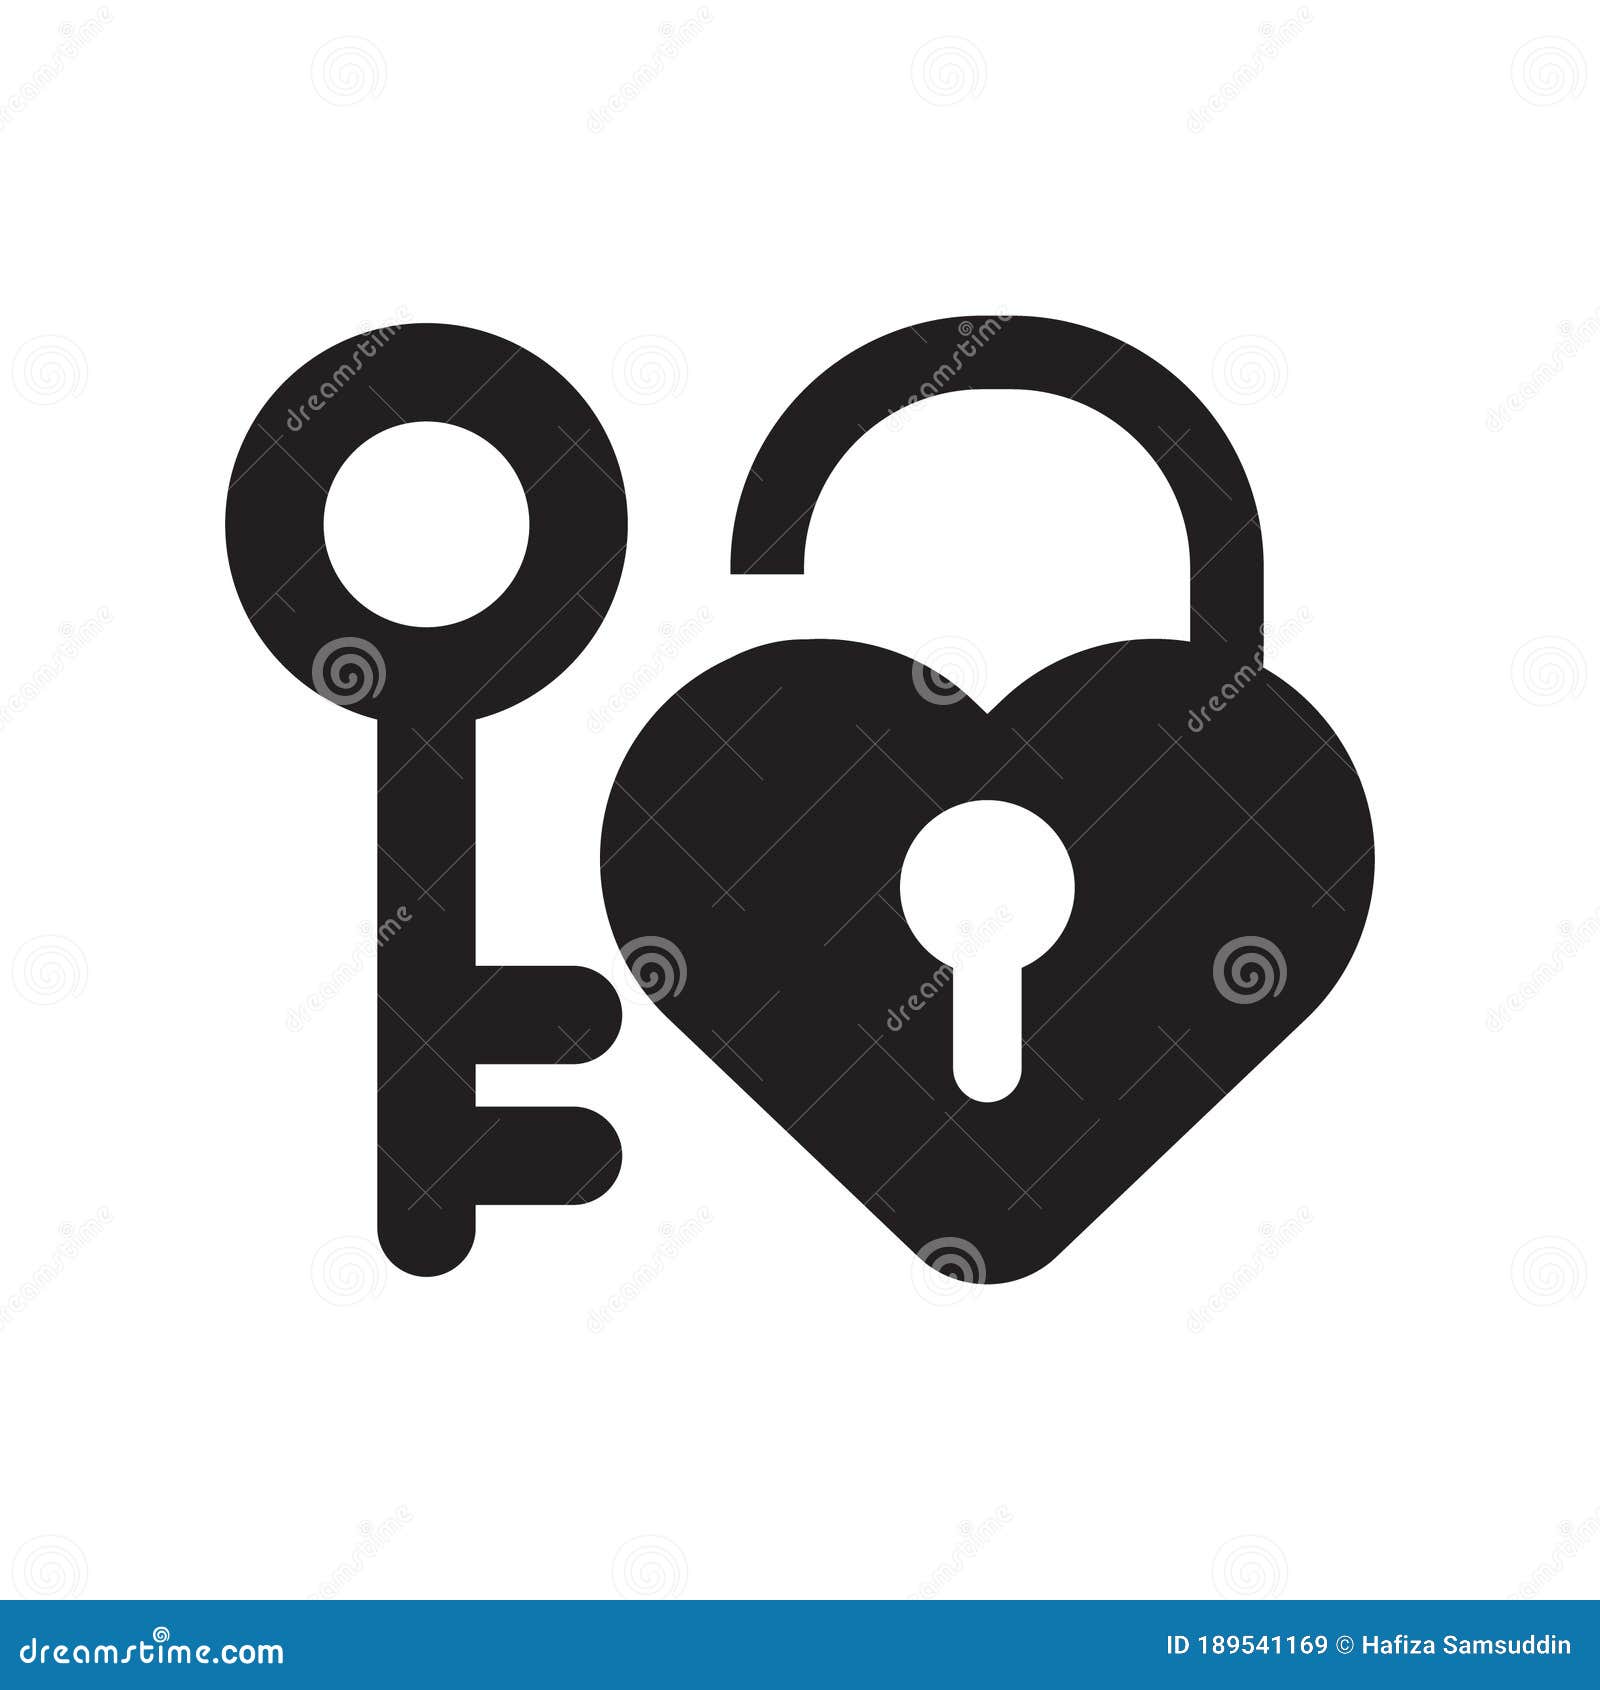 Heart shaped padlock and key for love lock unity Vector Image